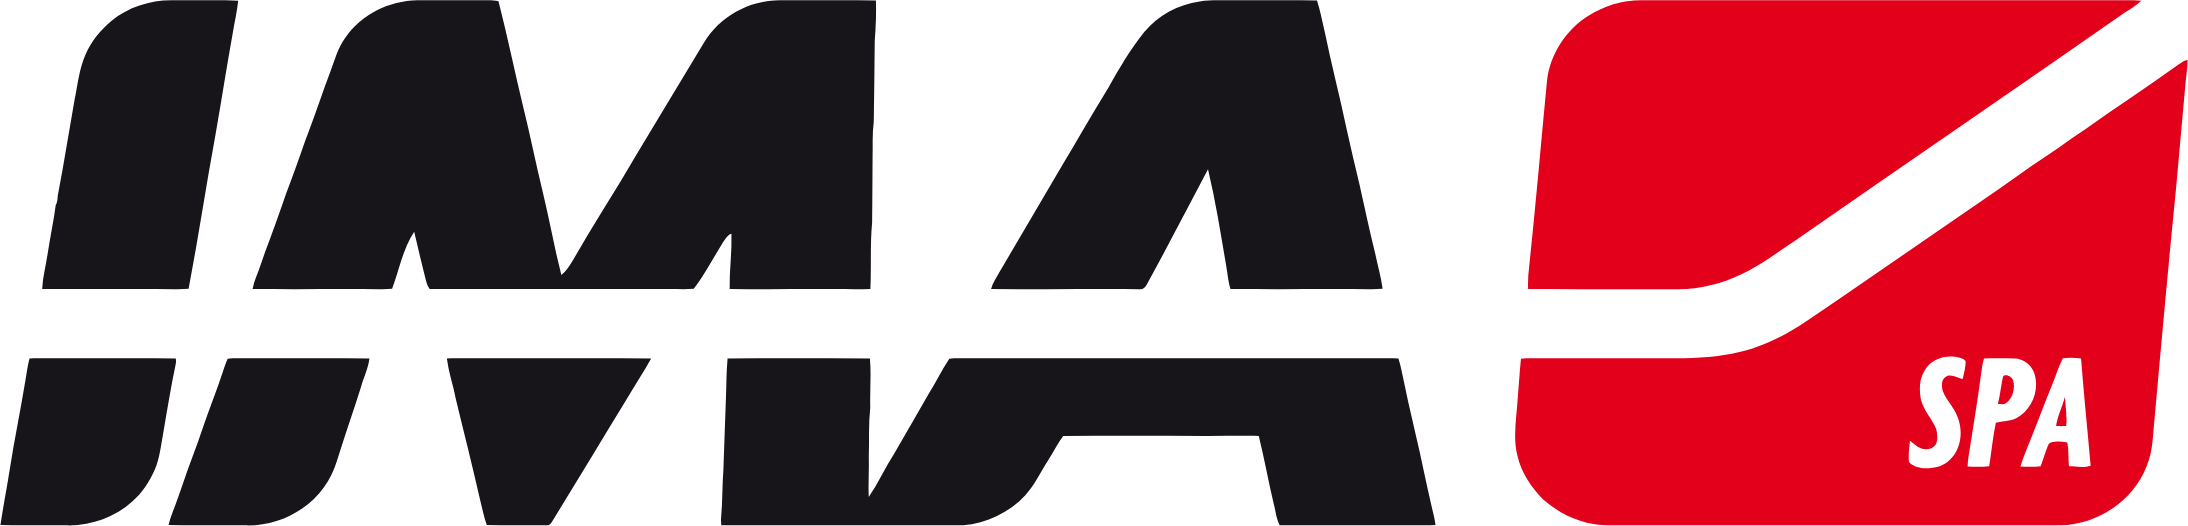 IMA Group logo large (transparent PNG)